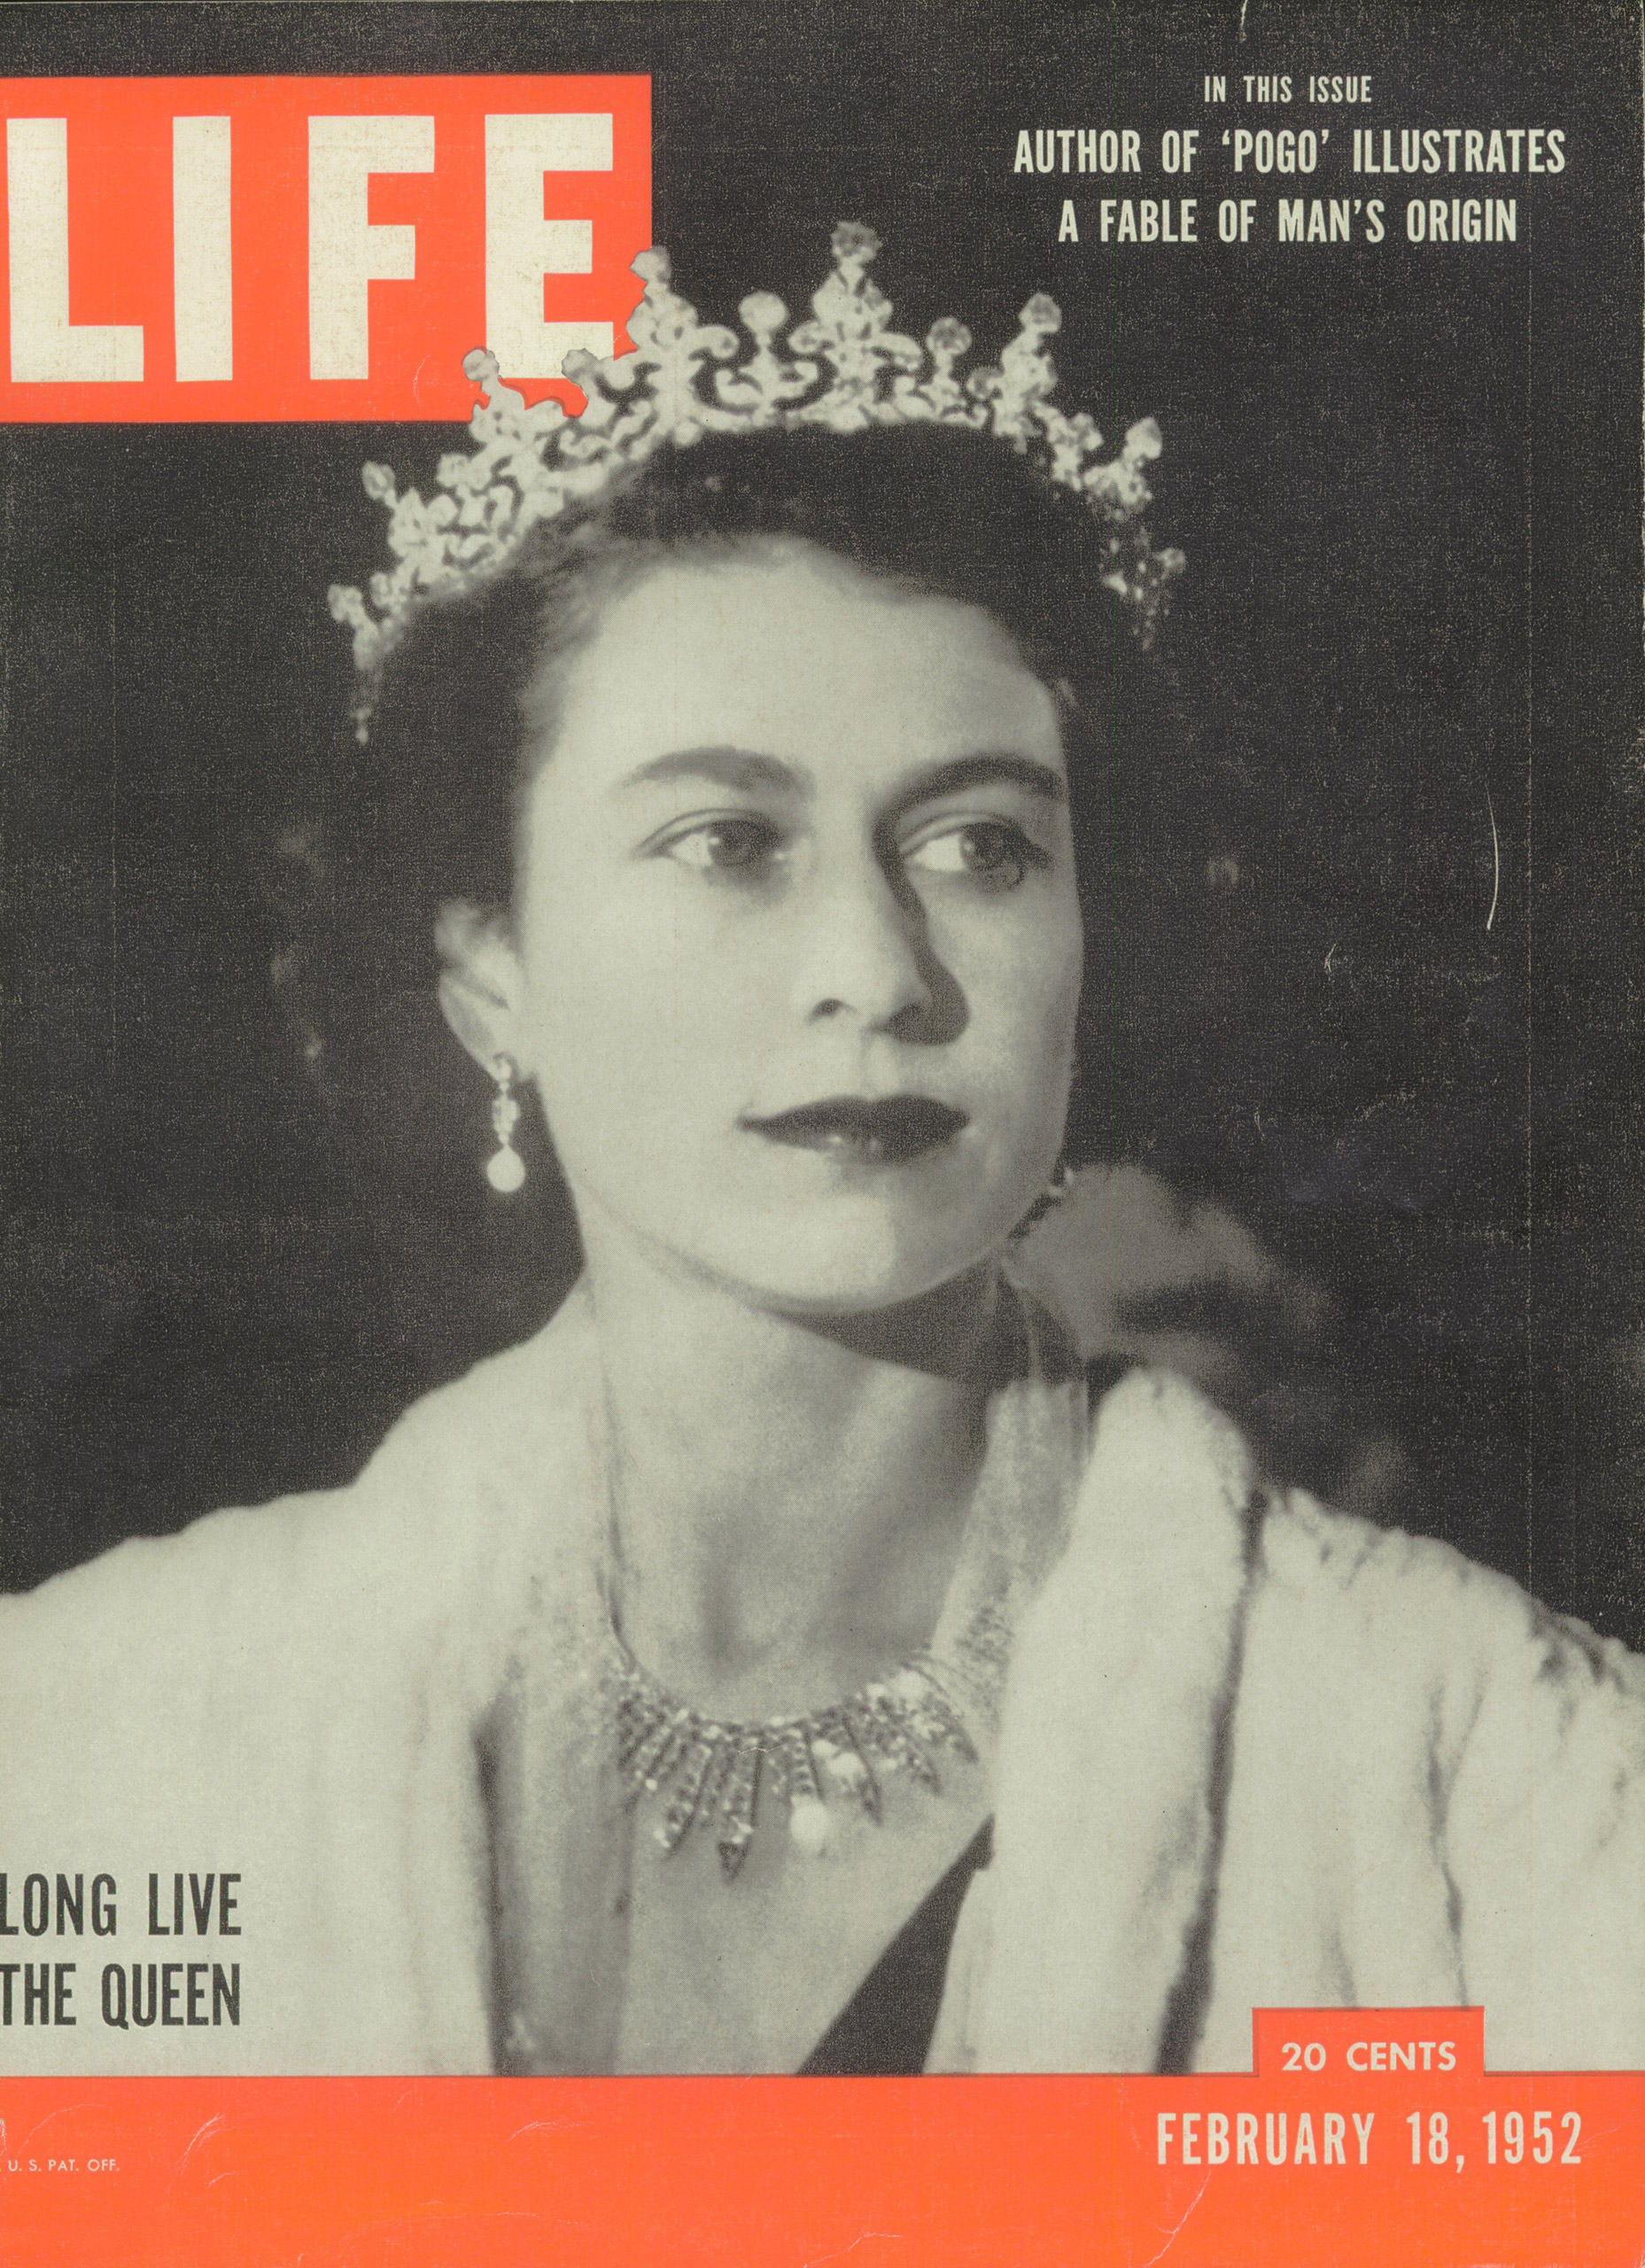 Feb. 18, 1952 cover of LIFE magazine.